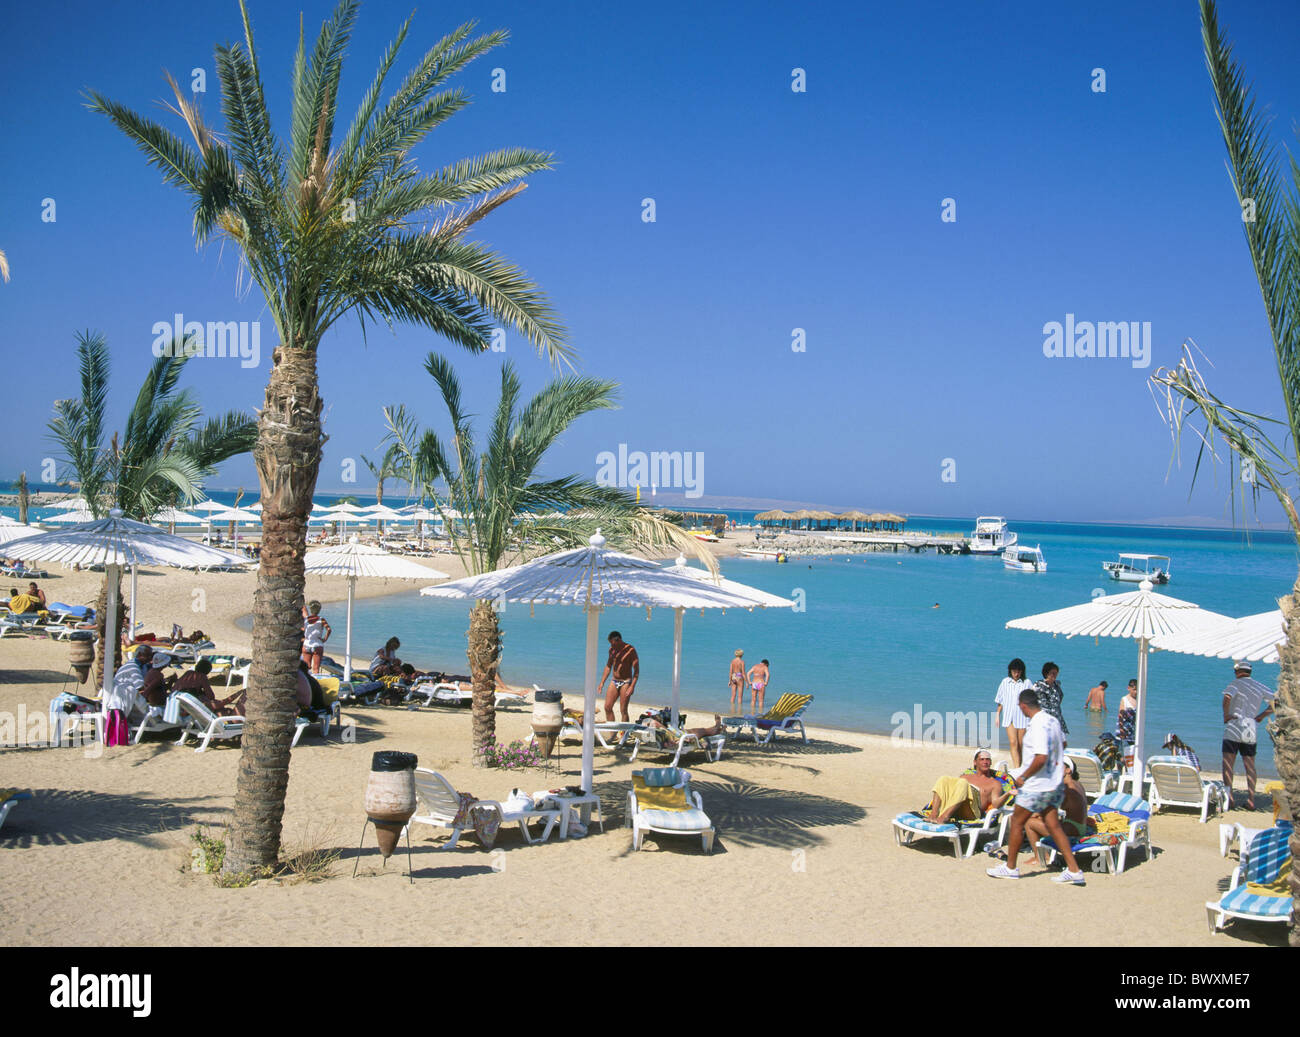 Egypt North Africa beach hotel Hilton Hurghada people palms sunshades beach holidays Stock Photo